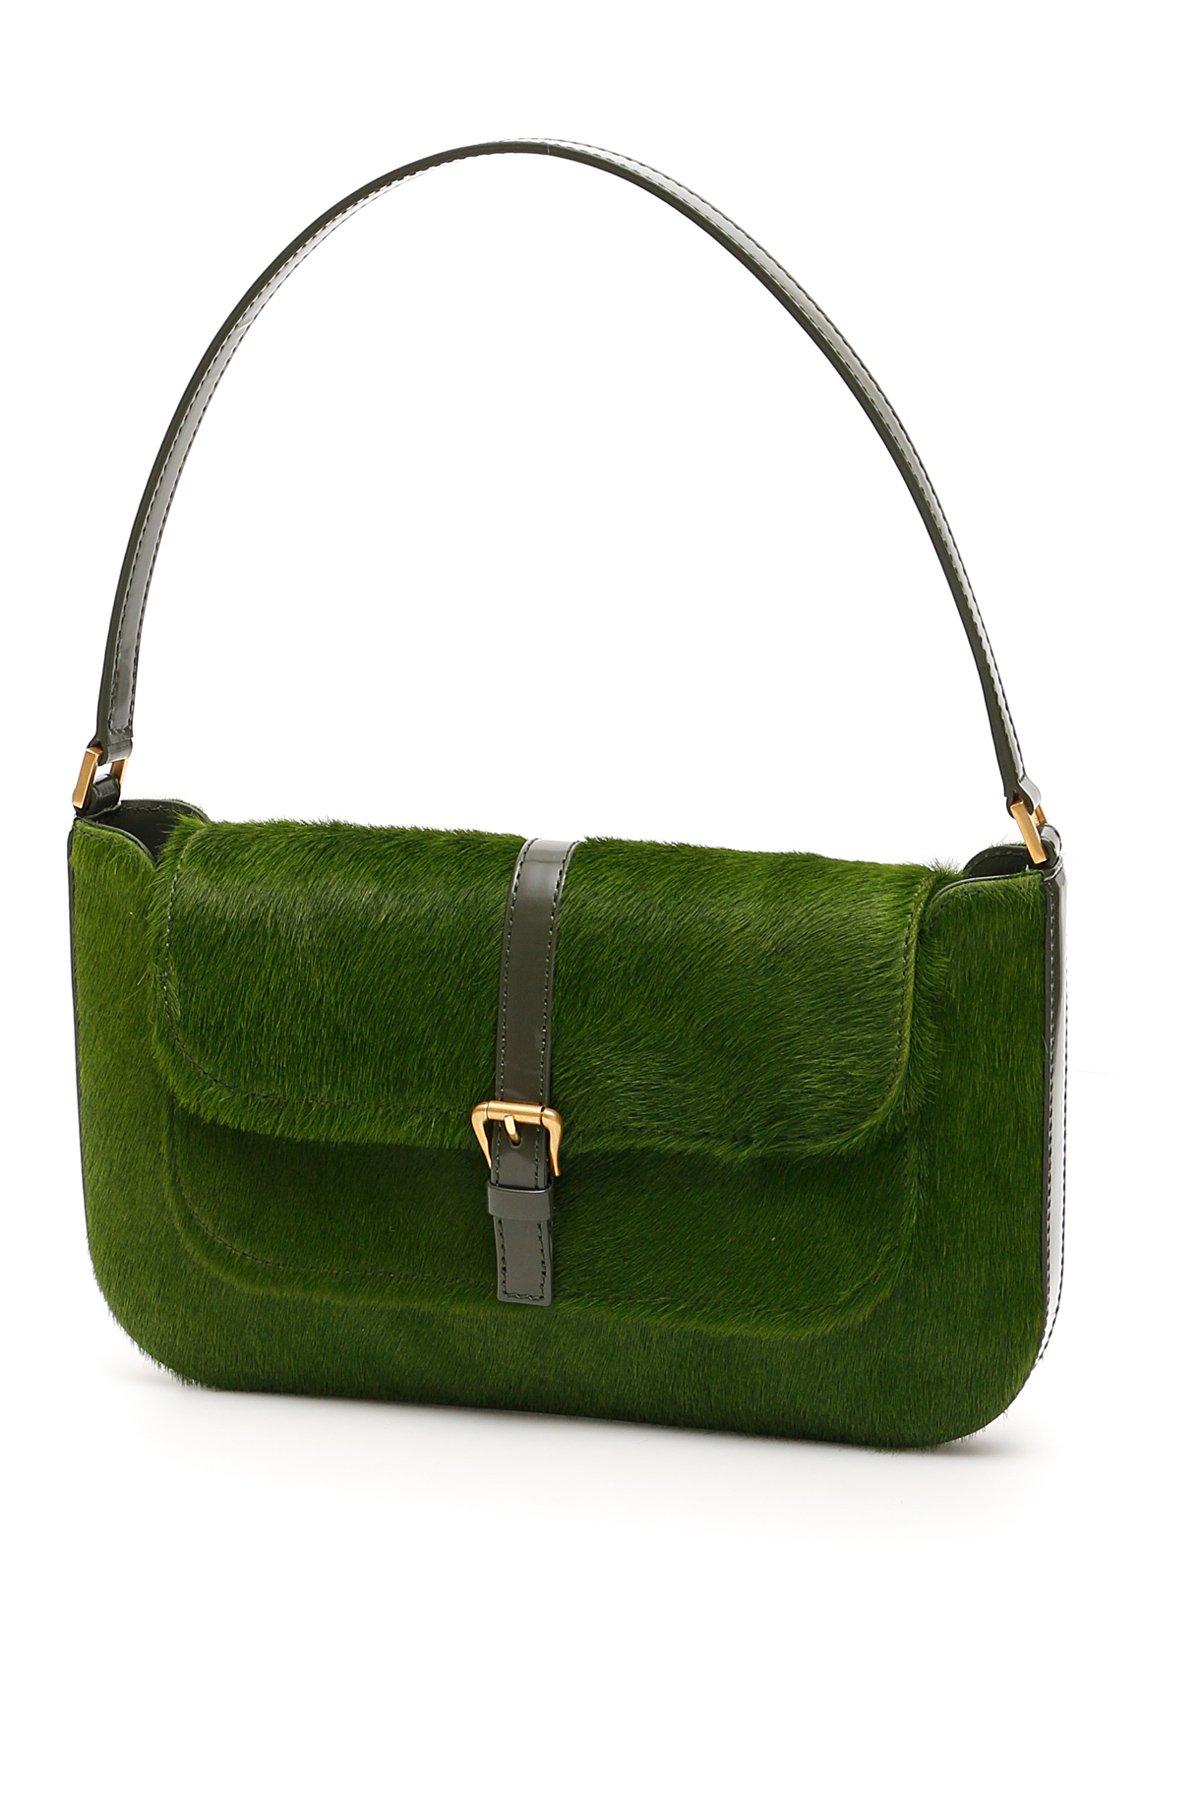 BY FAR Leather Bicolor Pony Miranda Bag in Green - Lyst